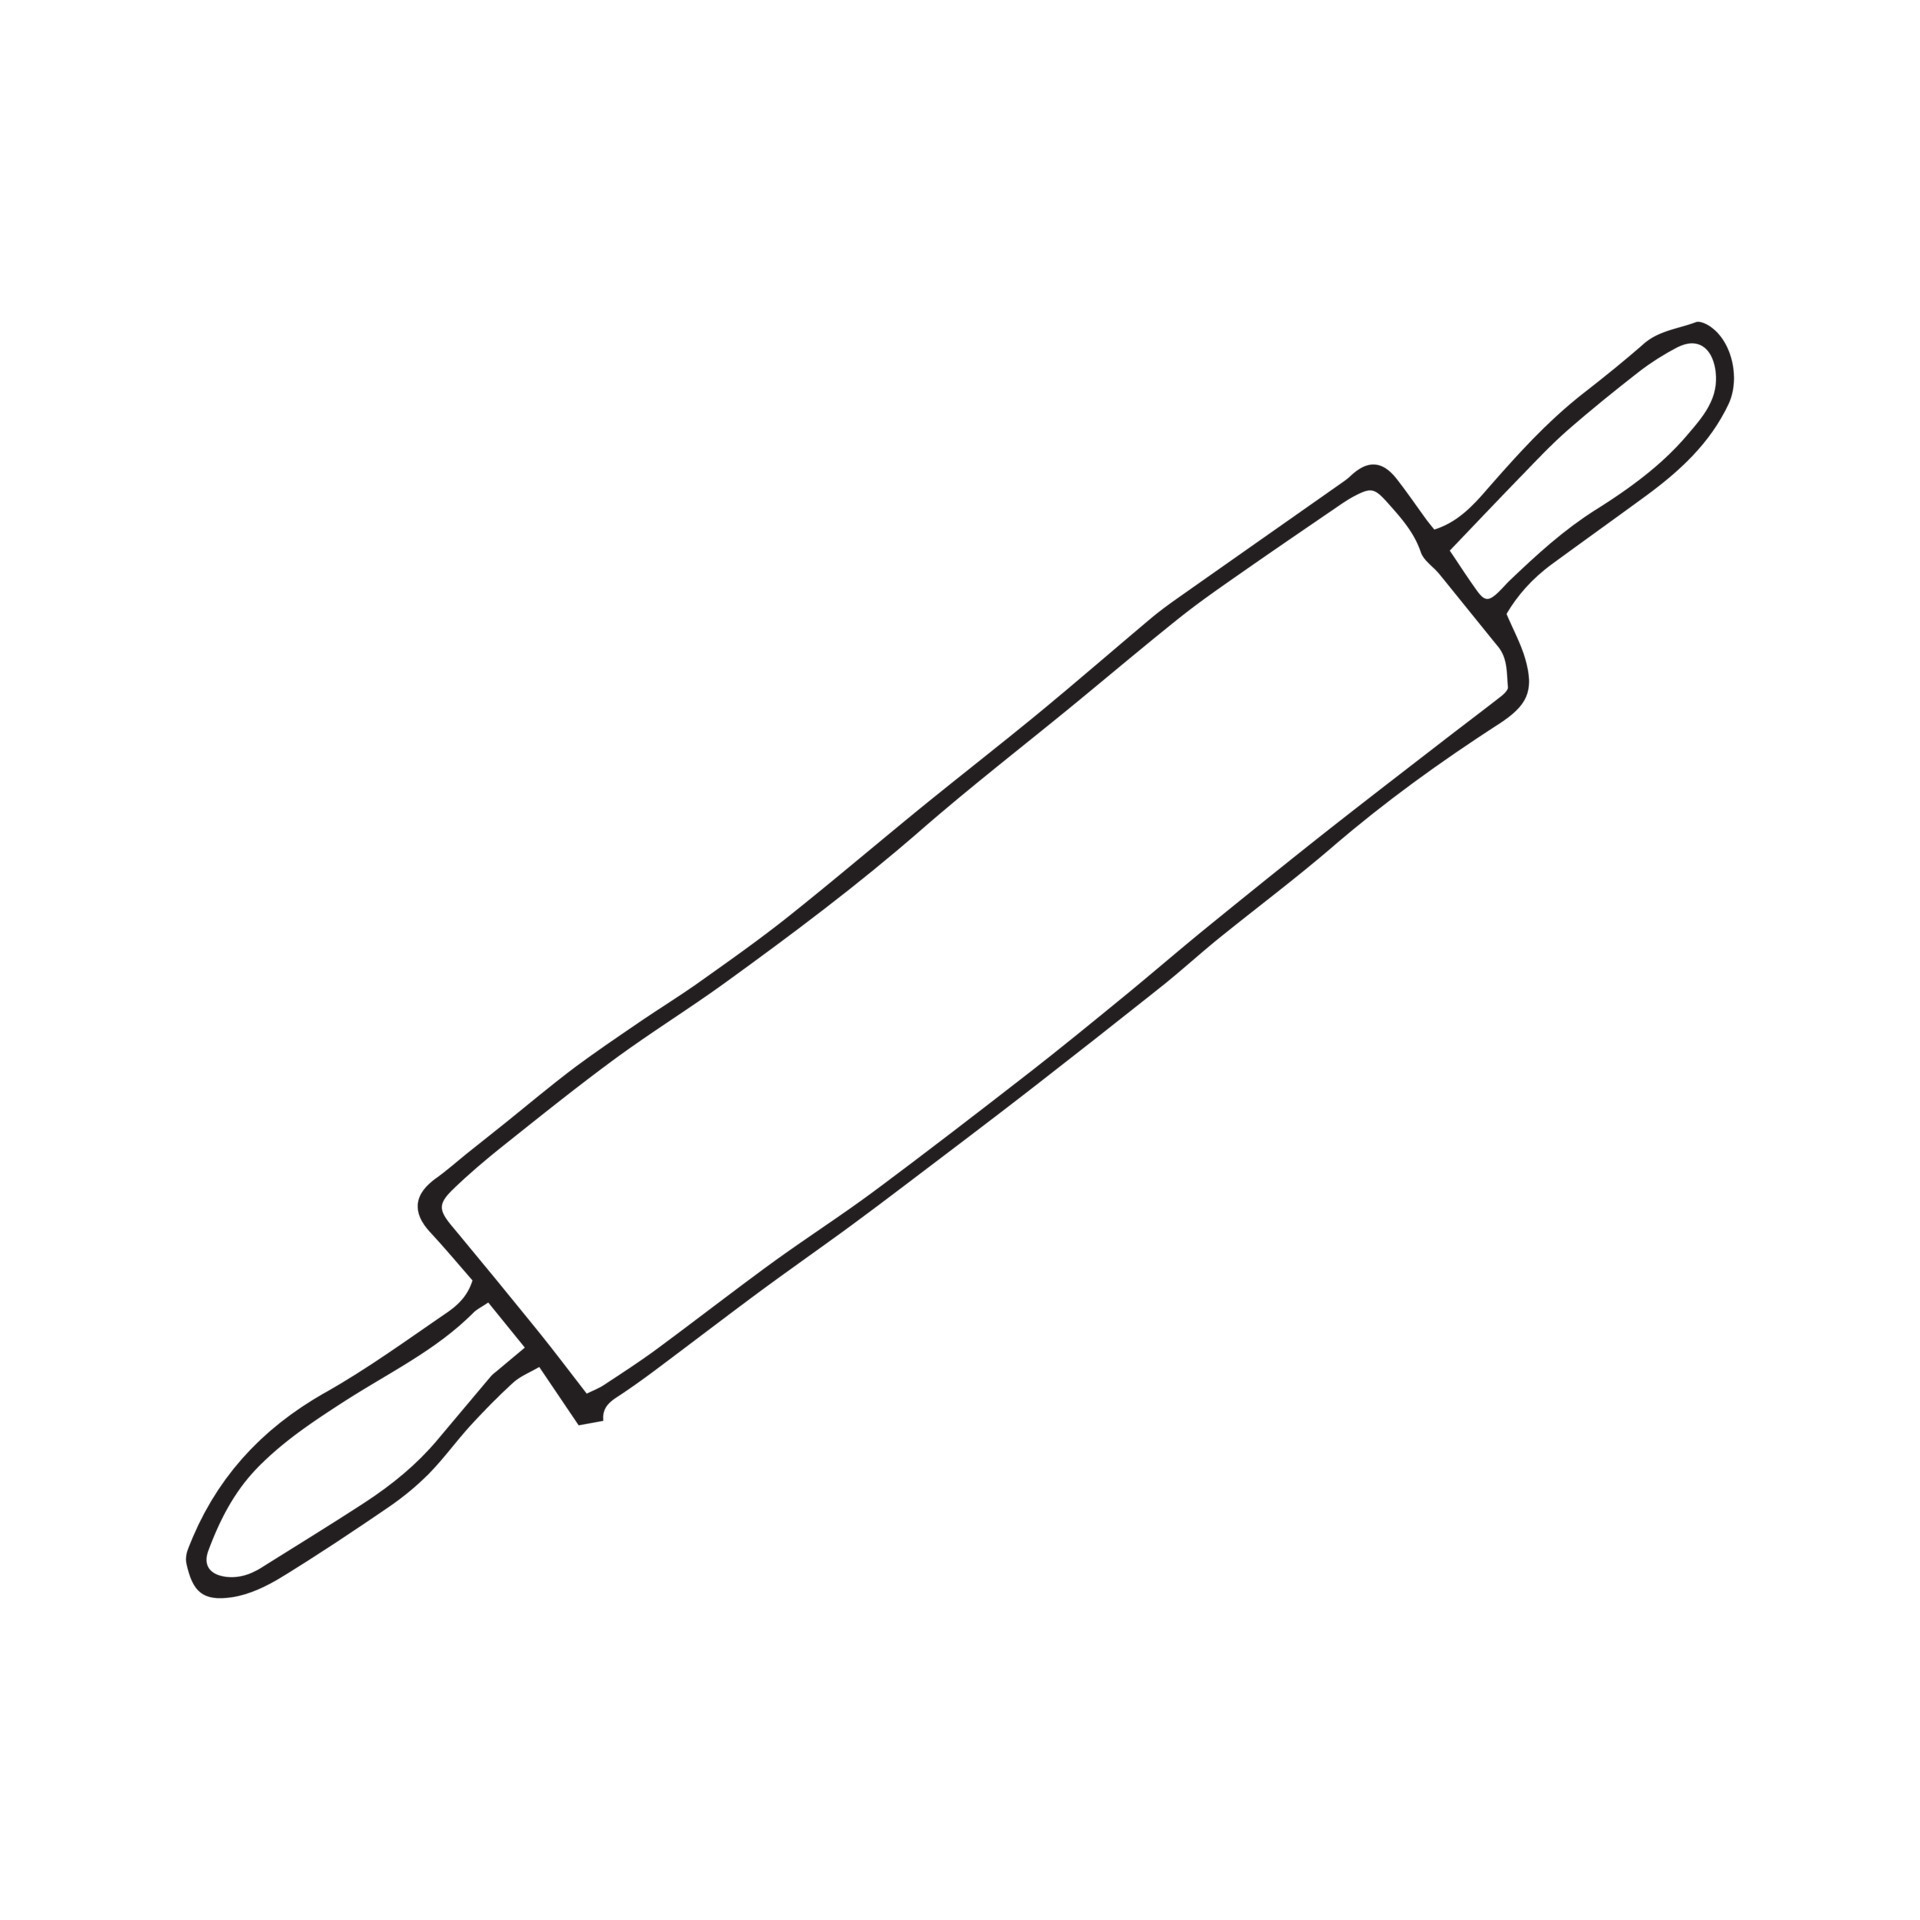 Pin on Drawing